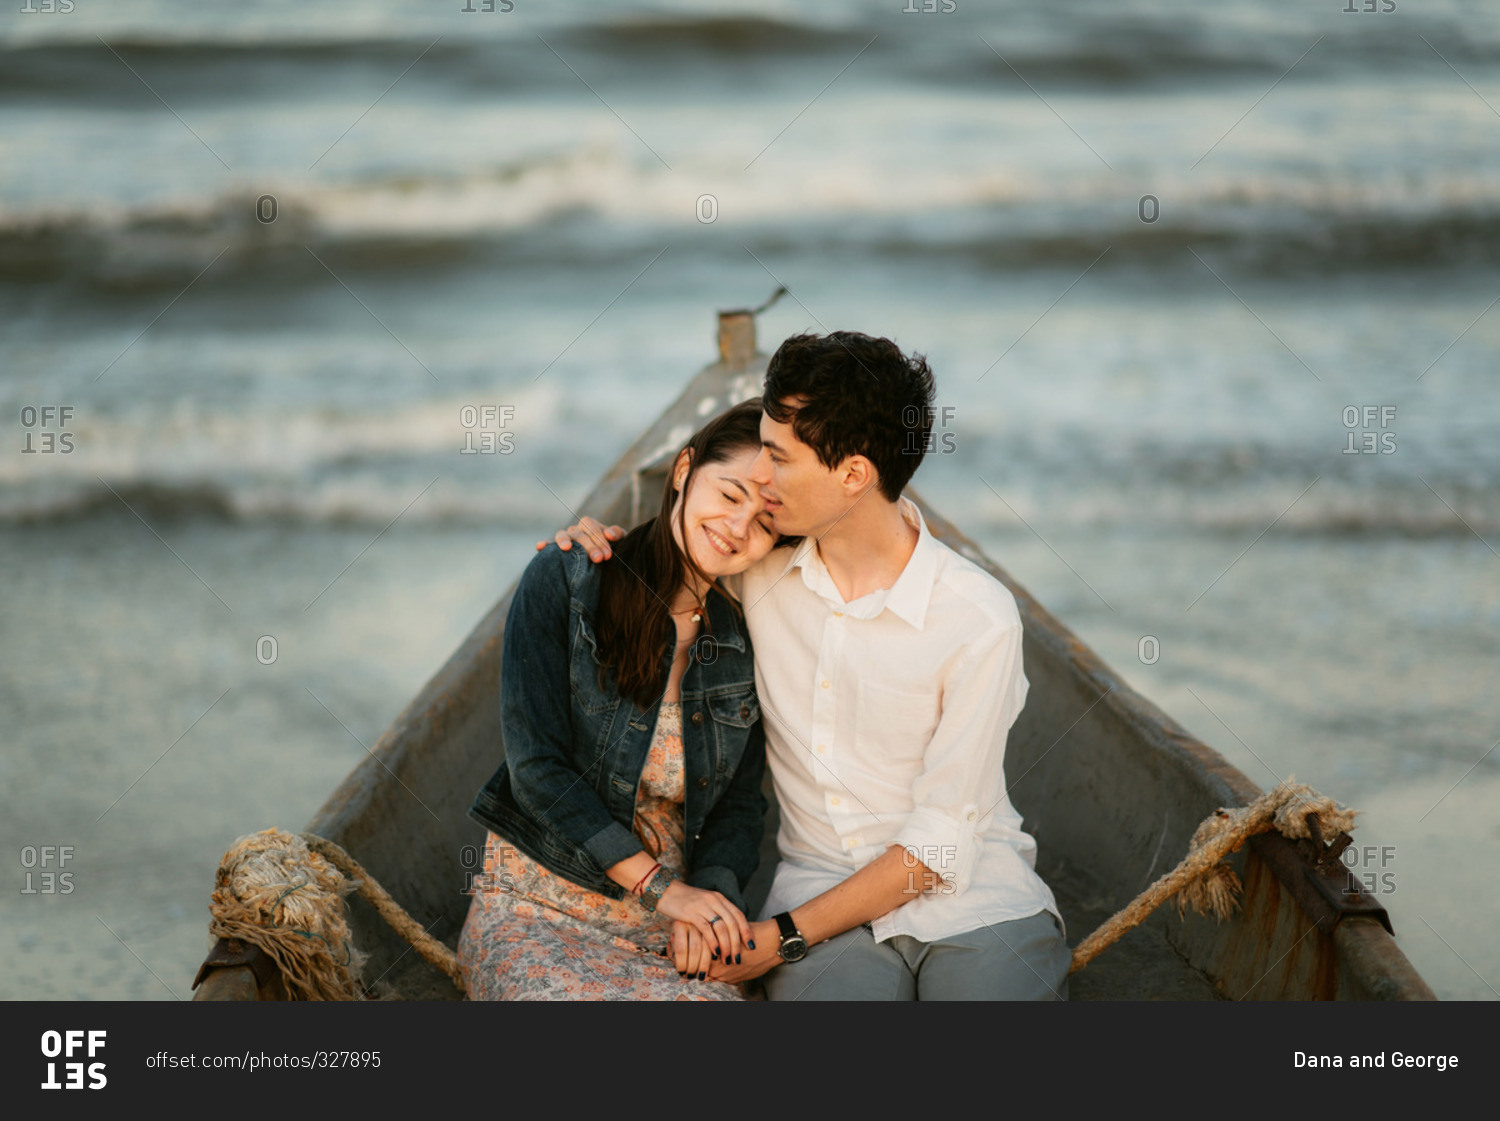 Effortless + Romantic Couples Beach Photo Session in Hawaii — Hawaii  Wedding Photographer